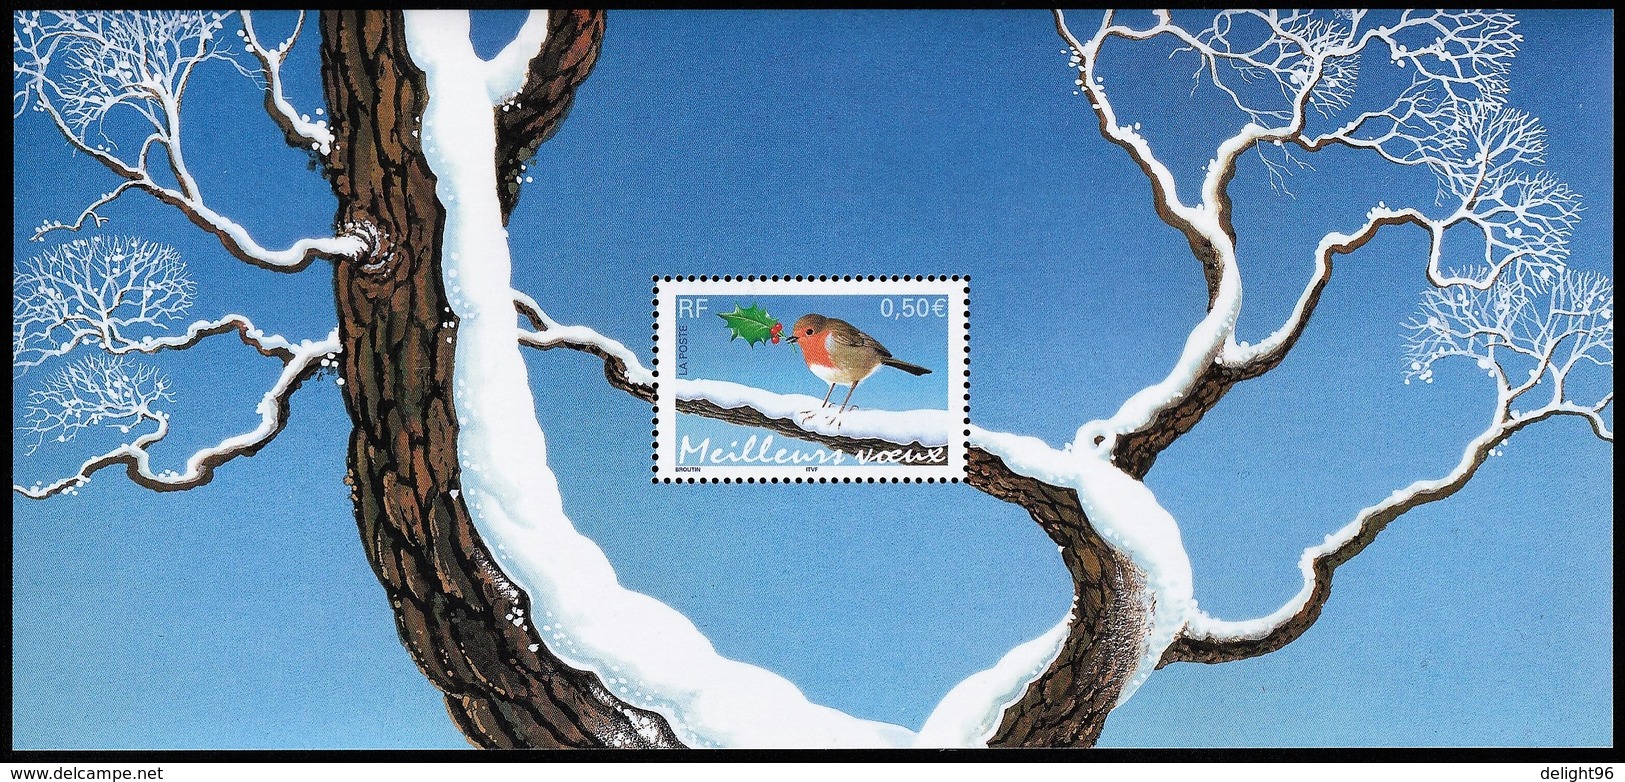 2003 France Greetings: European Robin Souvenir Sheet (** / MNH / UMM) - Songbirds & Tree Dwellers